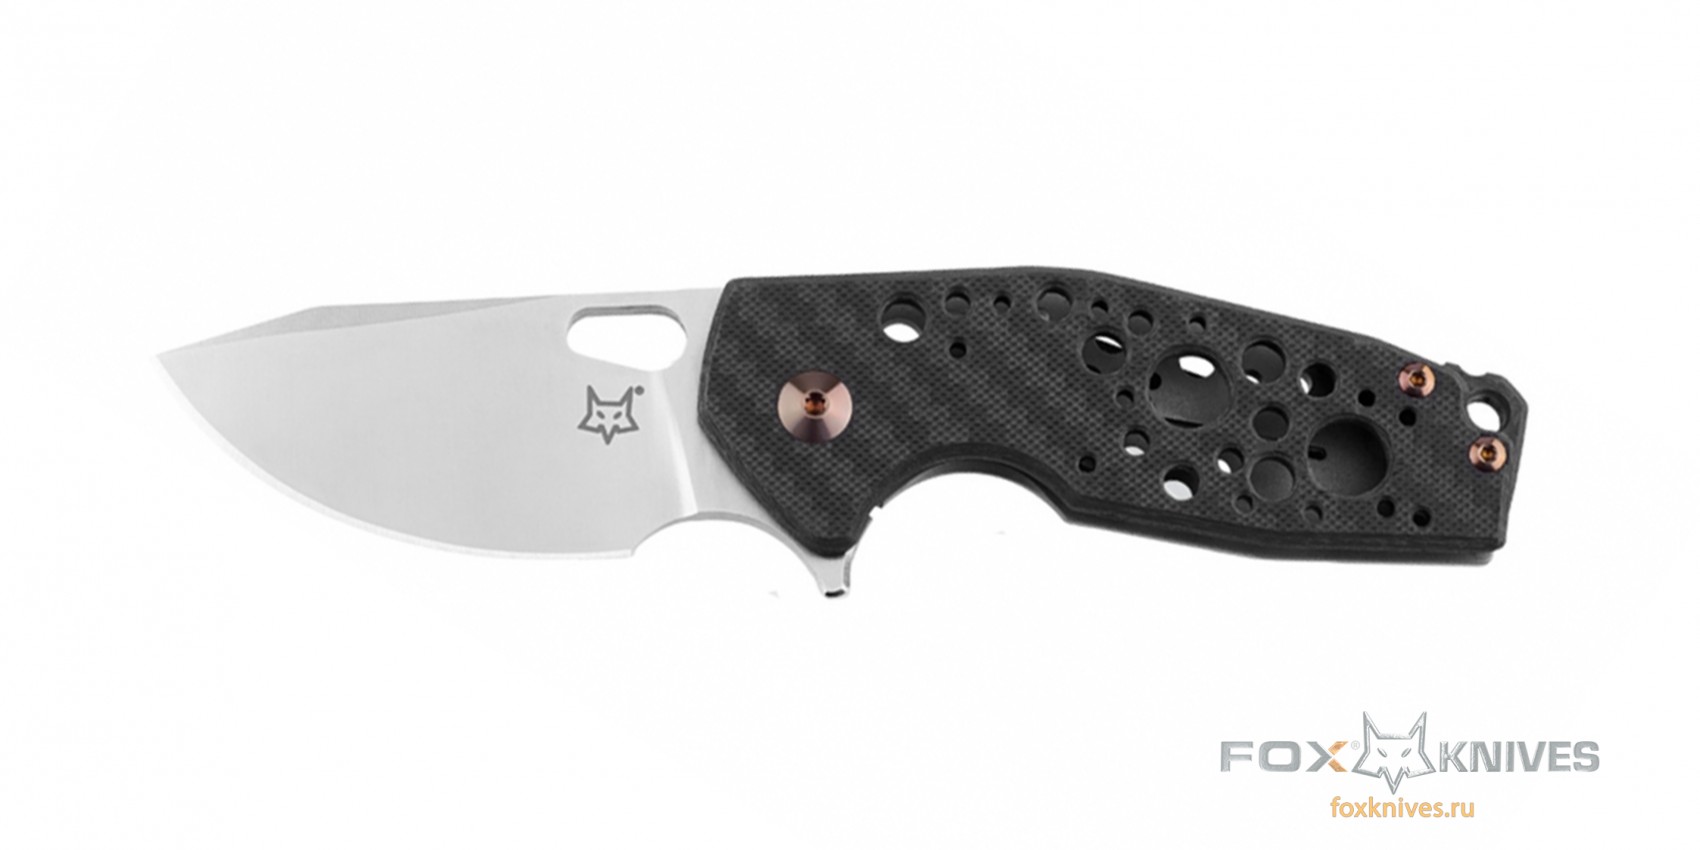 Fox Knives кинжал. Нож Fox FX. Fox e.r.t rescua Knife FX-211. Нож складной 7010. Fox купить спб